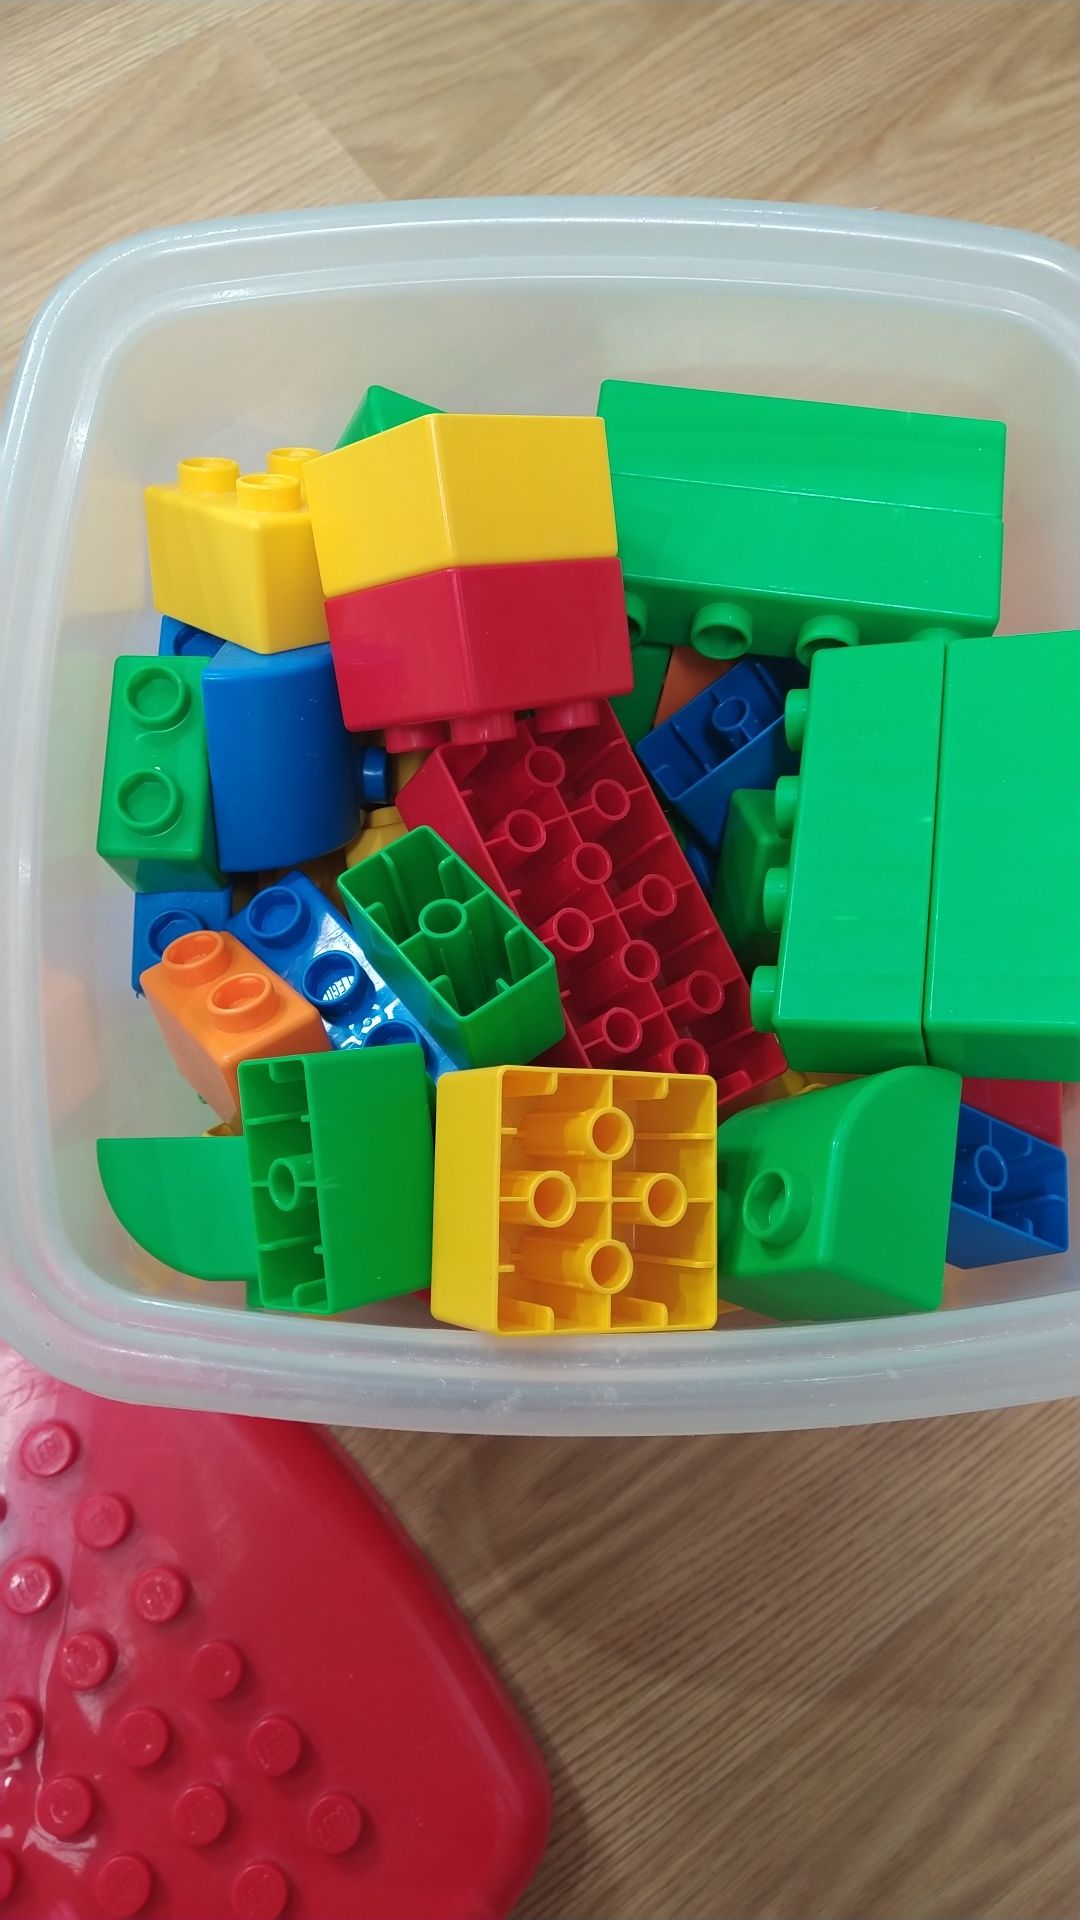 Lego duplo - 2 caixas